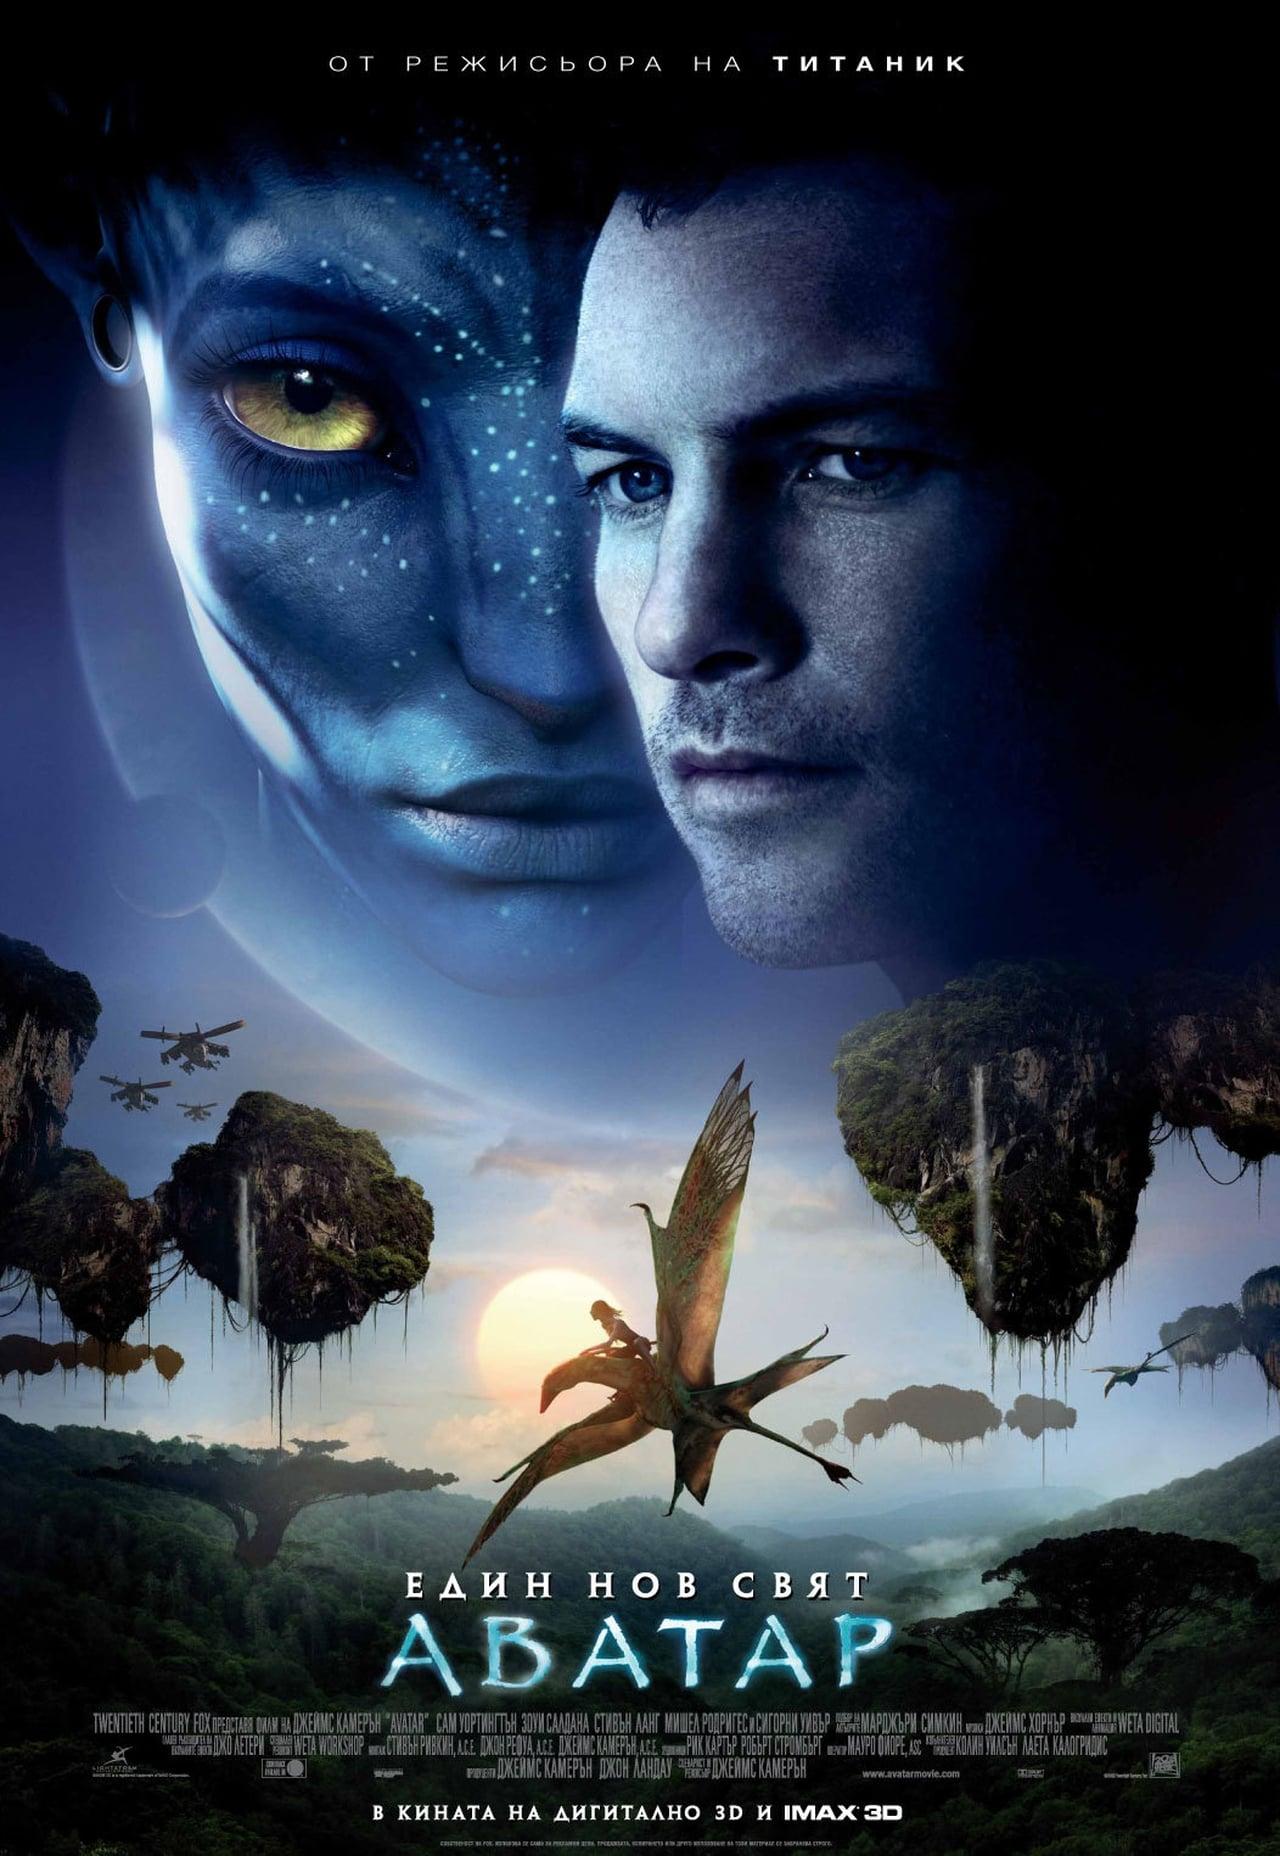 Avatar / Аватар (2009)